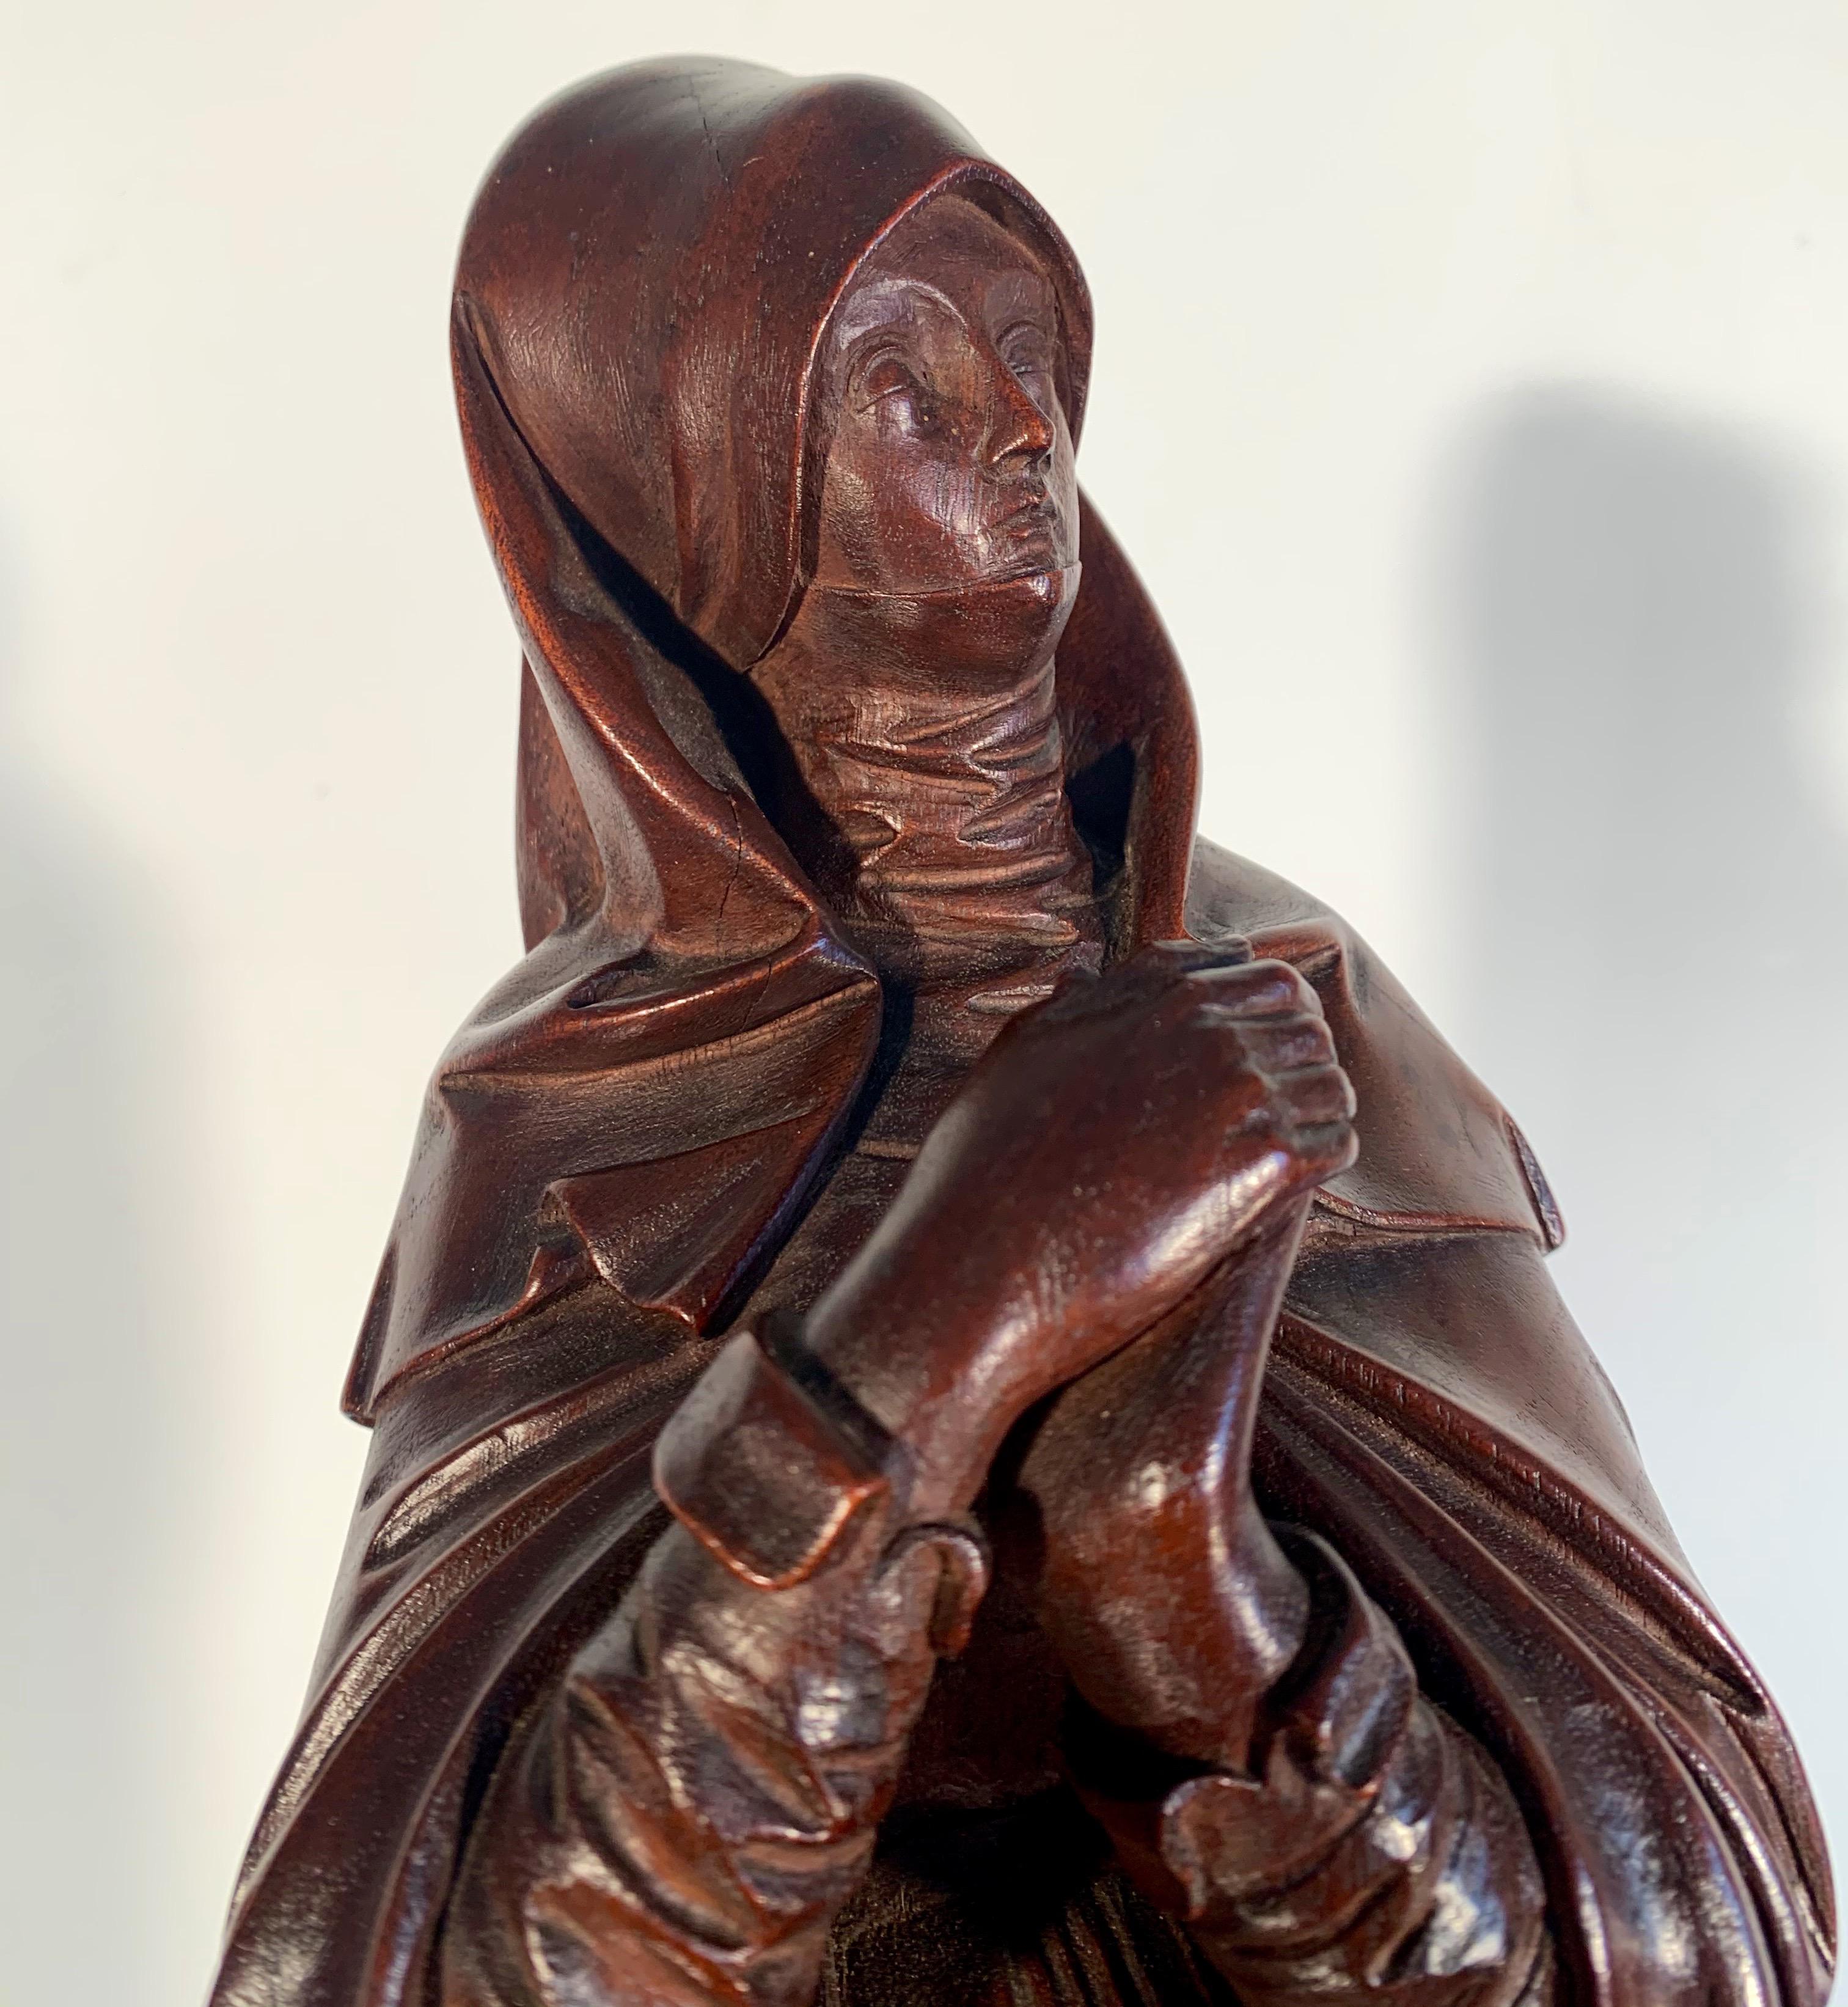 Hand-Carved Carved Antique Wooden Statuette / Sculpture of Saint Teresa of Avila / Jesus